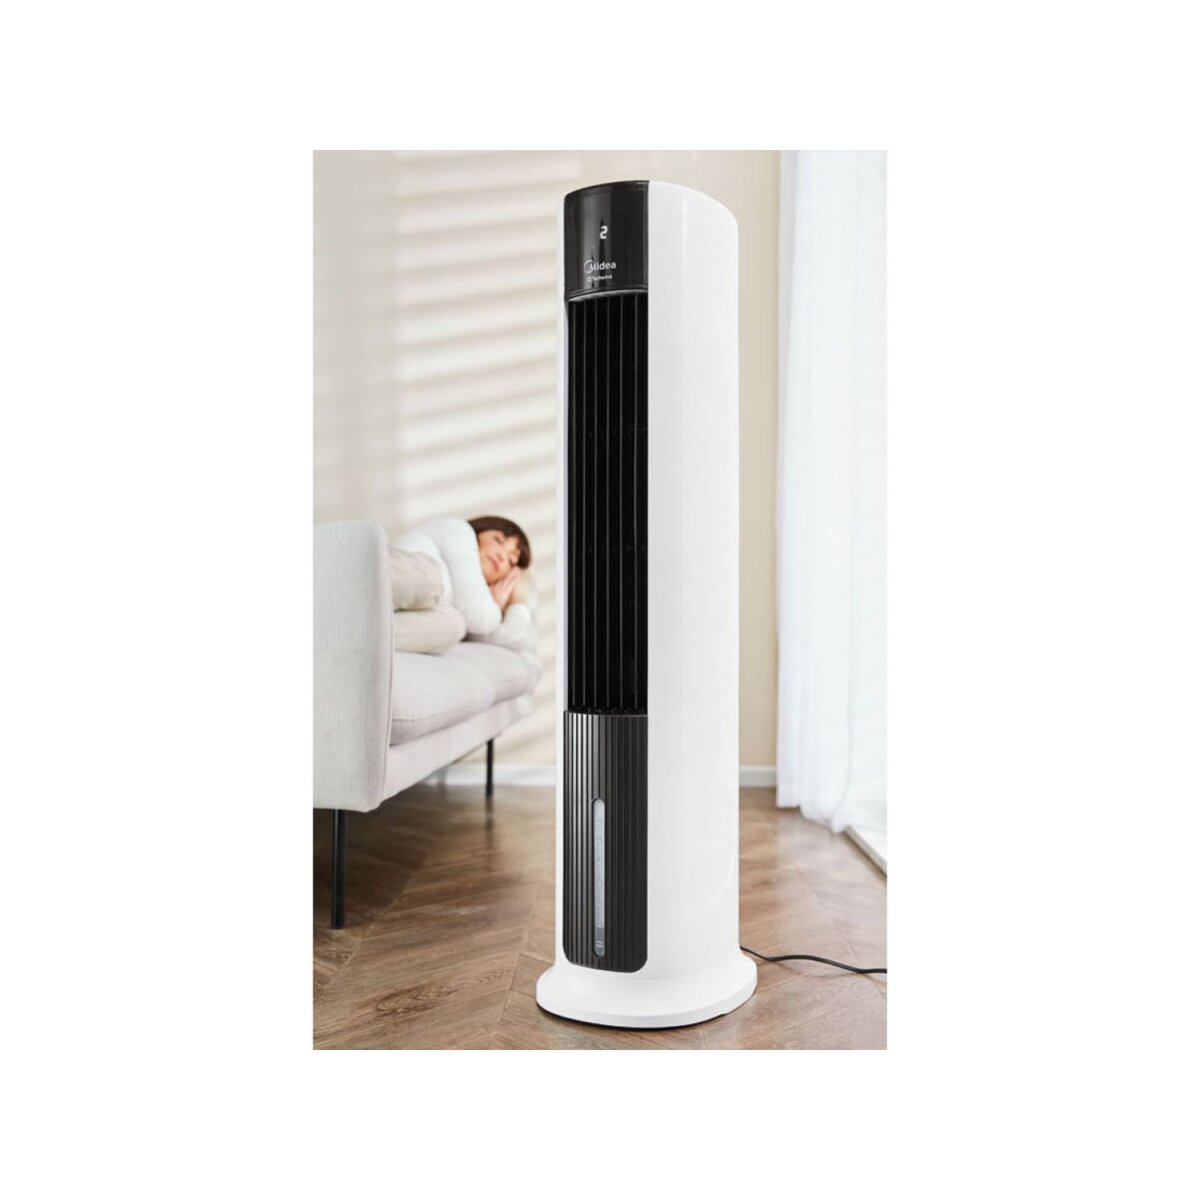 Comfee Luftkühler »Silent Air Cooler«, mit Timerfunktion - B-Ware sehr gut,  128,99 €